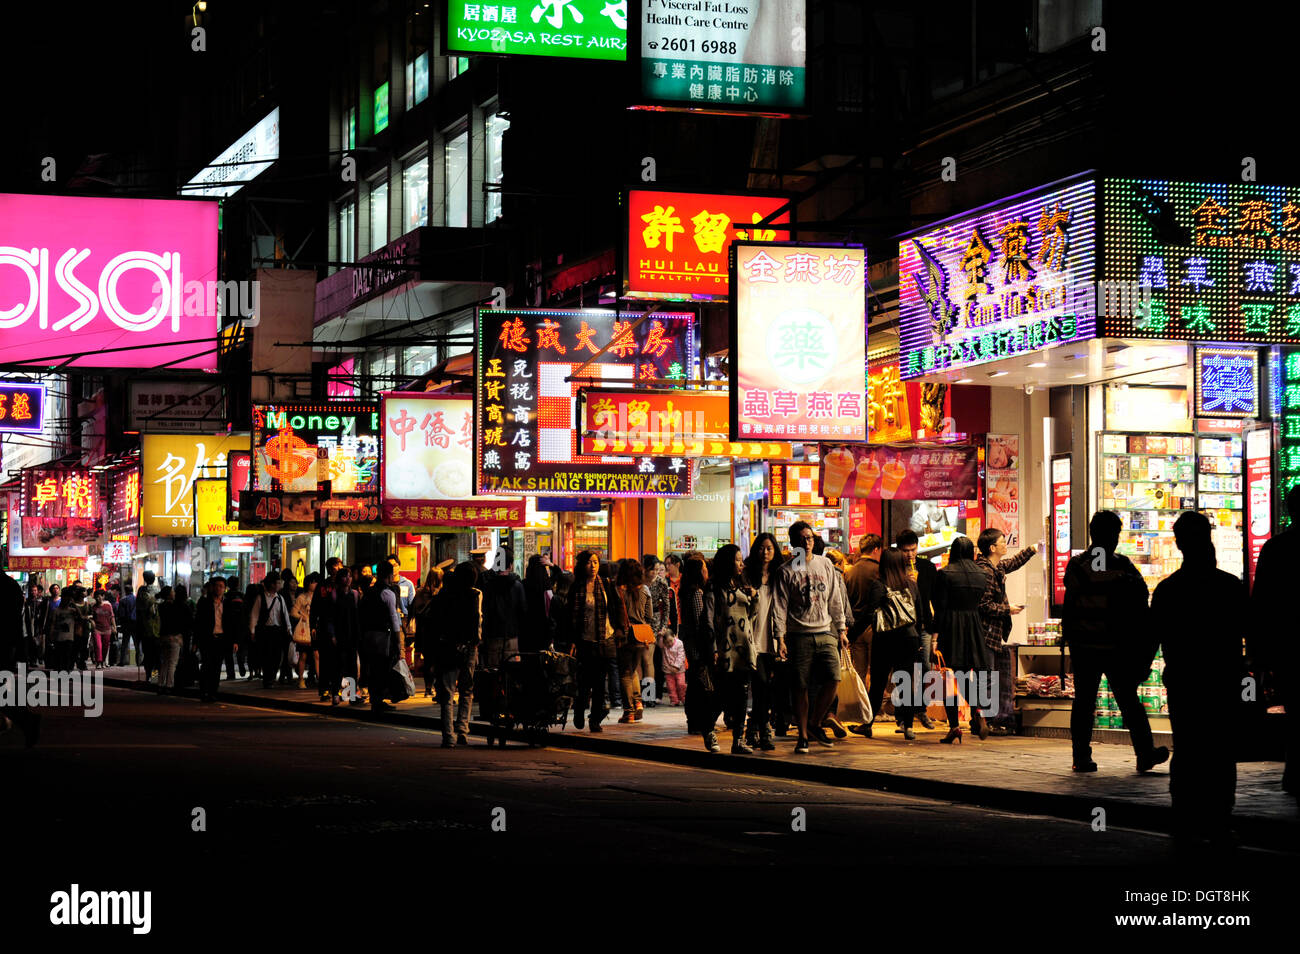 I negozi e le insegne al neon in una strada di notte, Haiphong Road, Tsim Sha Tsui, Kowloon, Hong Kong, Cina, Asia Foto Stock